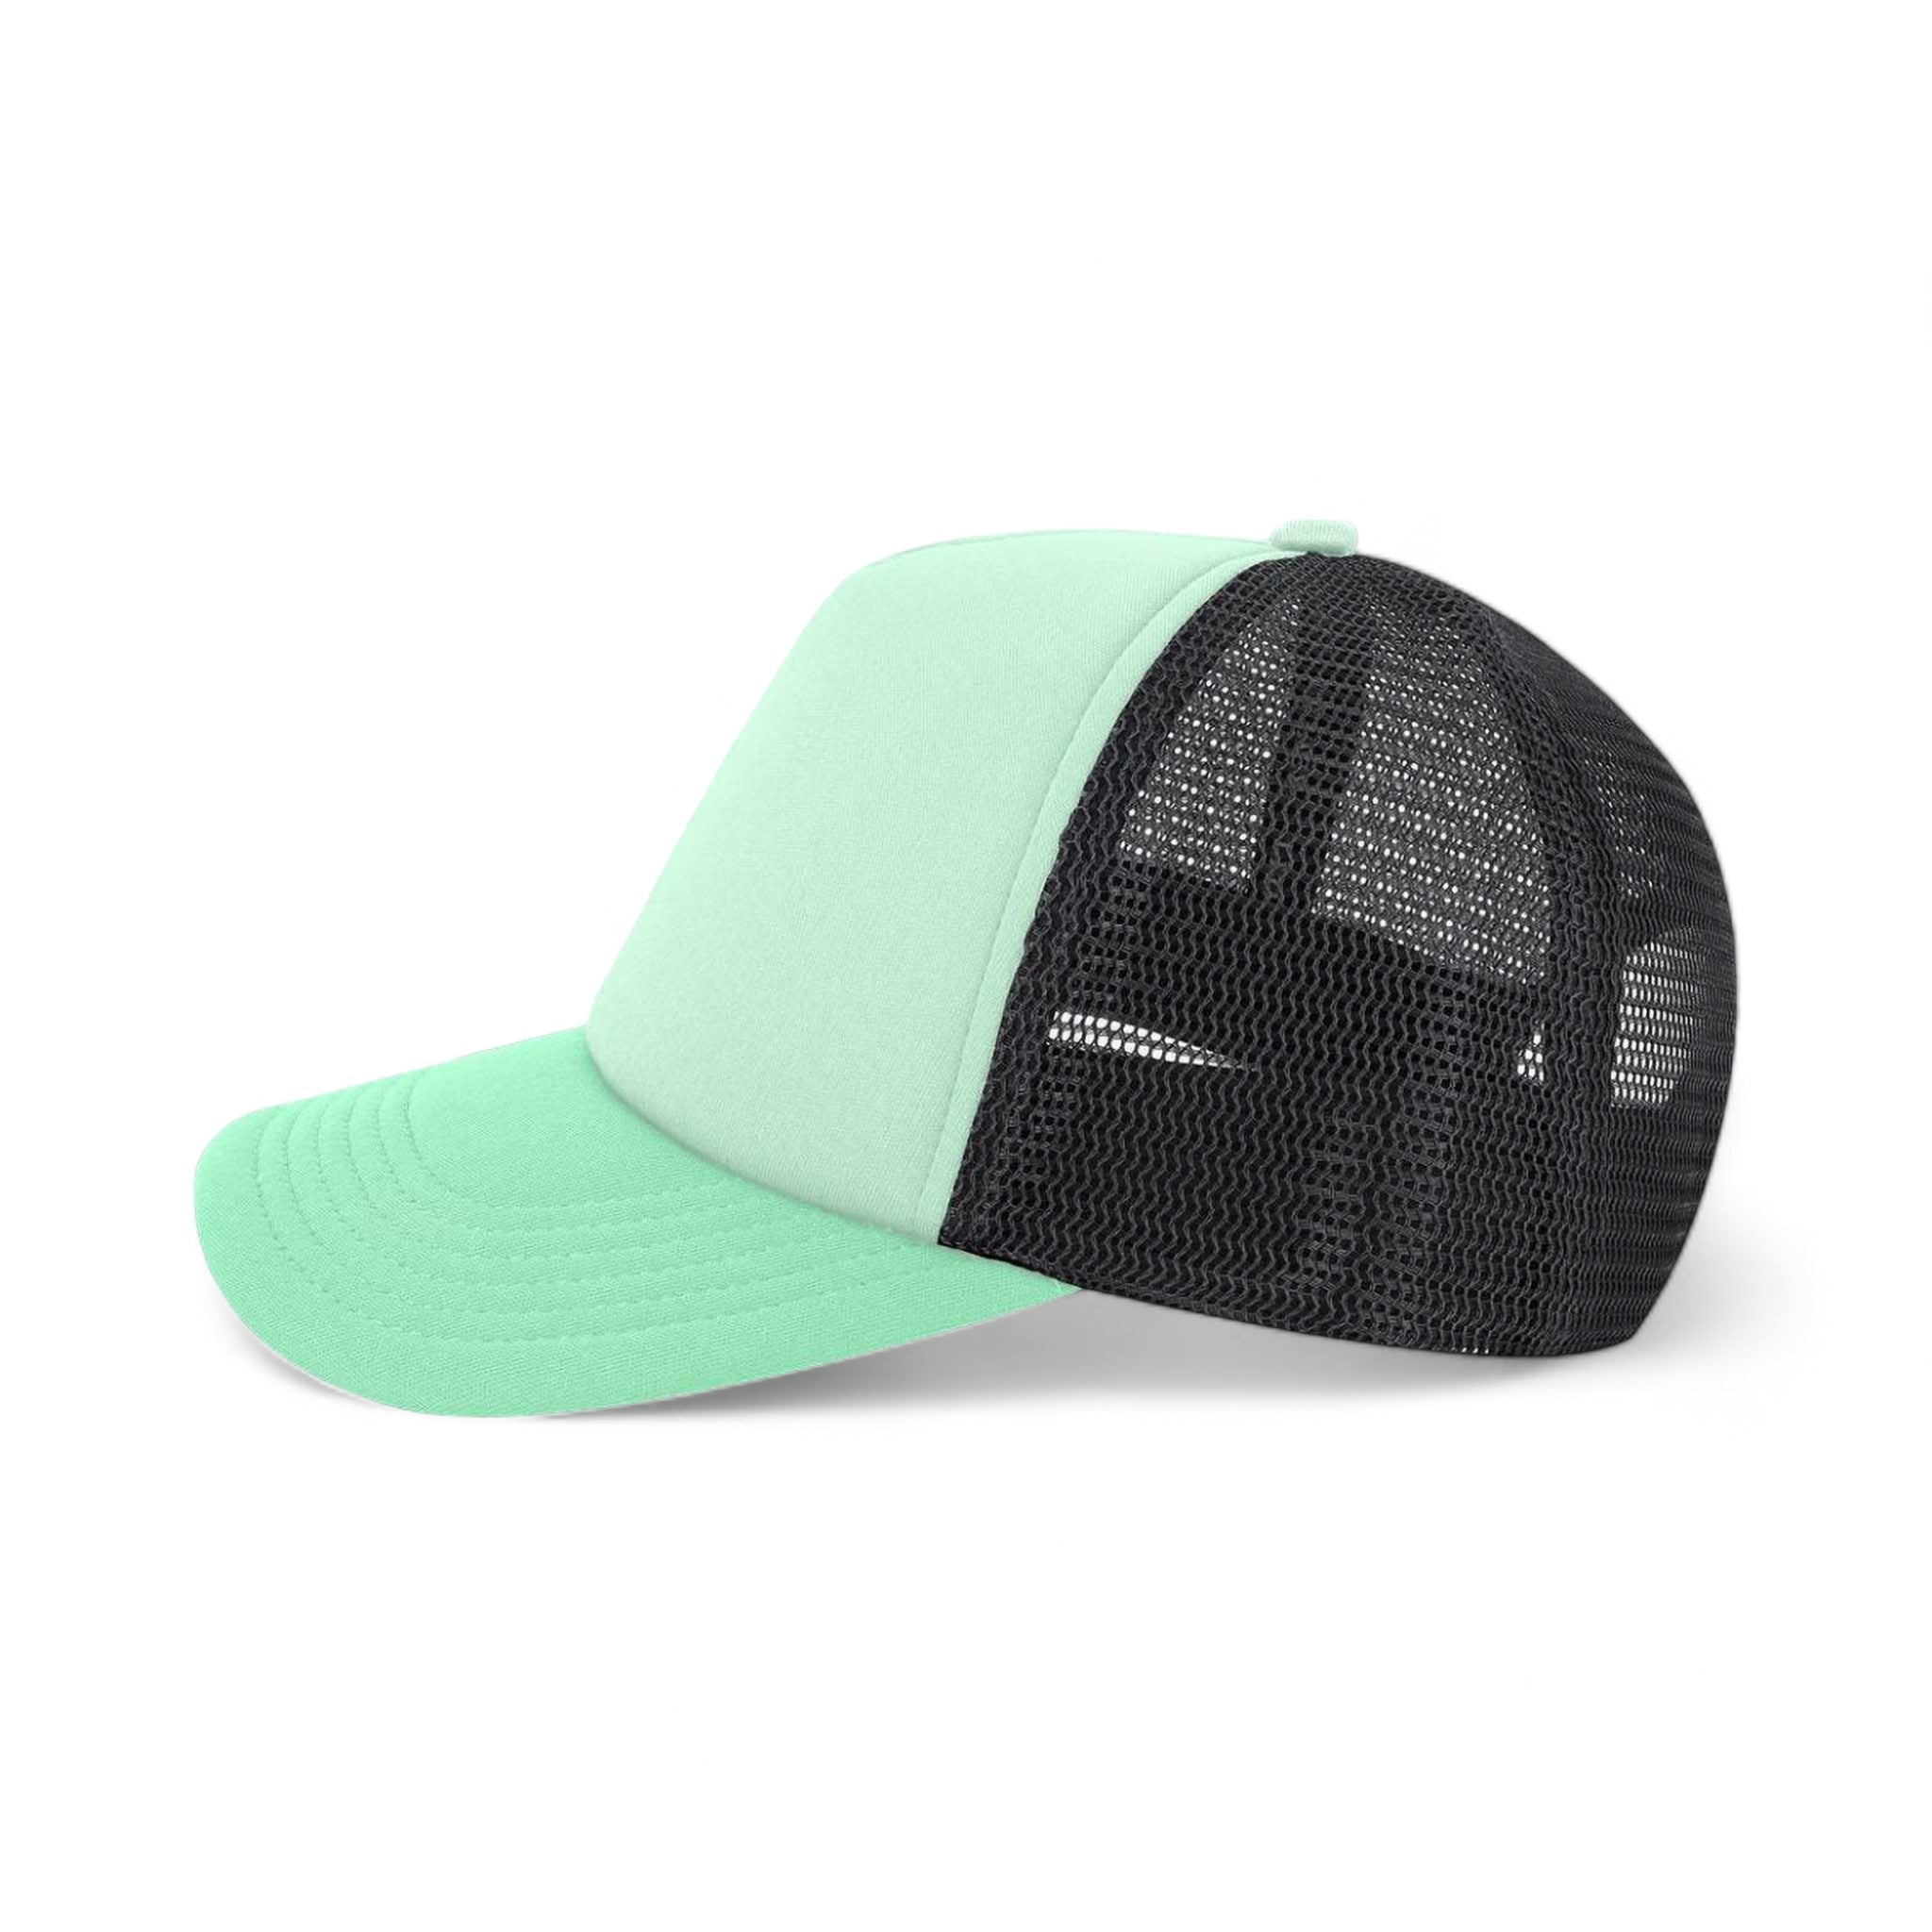 Side view of LEGACY LTA custom hat in light mint, dark mint and black